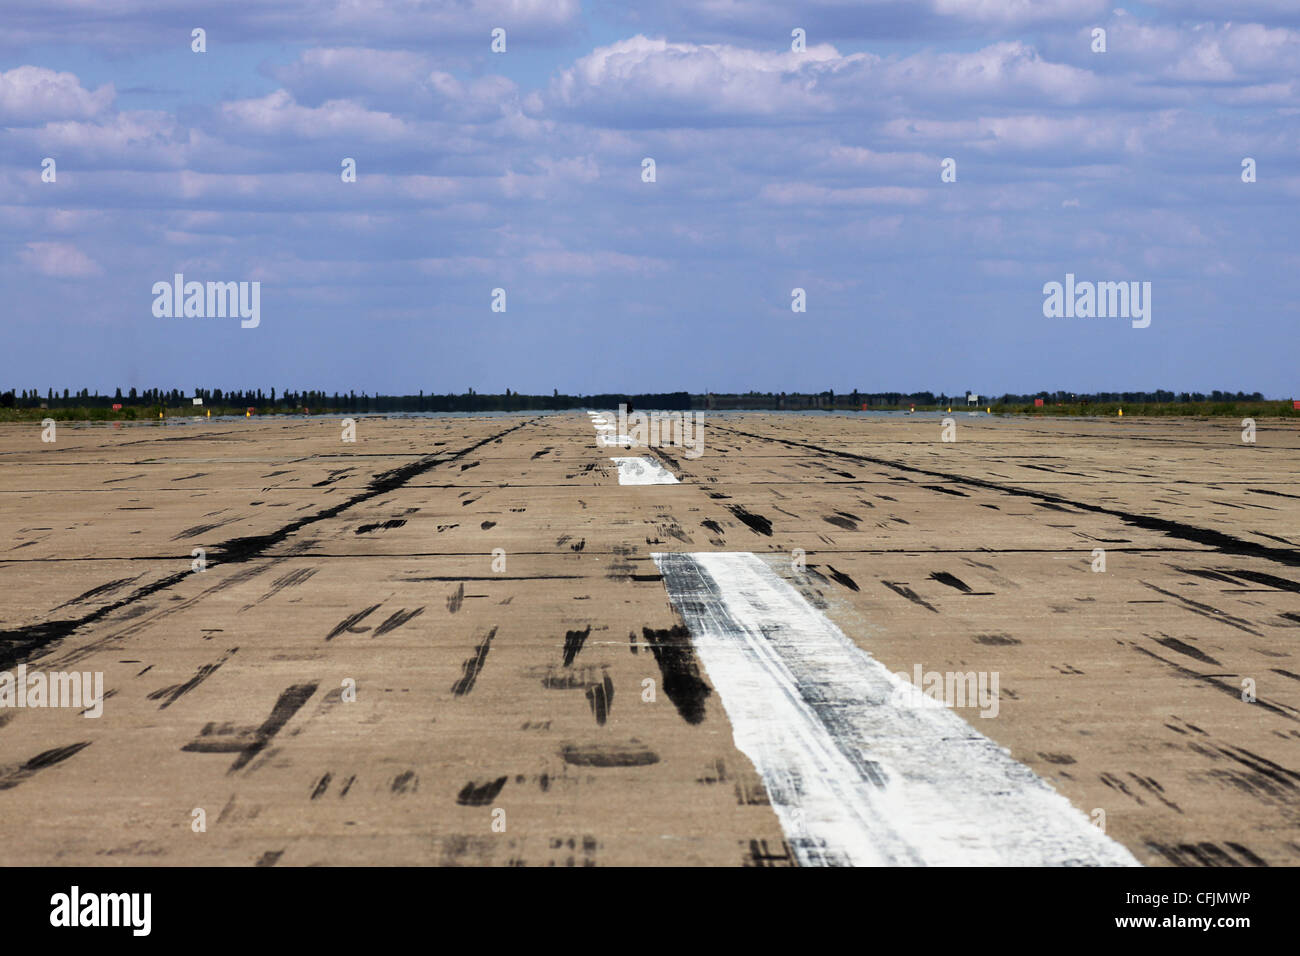 runway on aerodrome Stock Photo